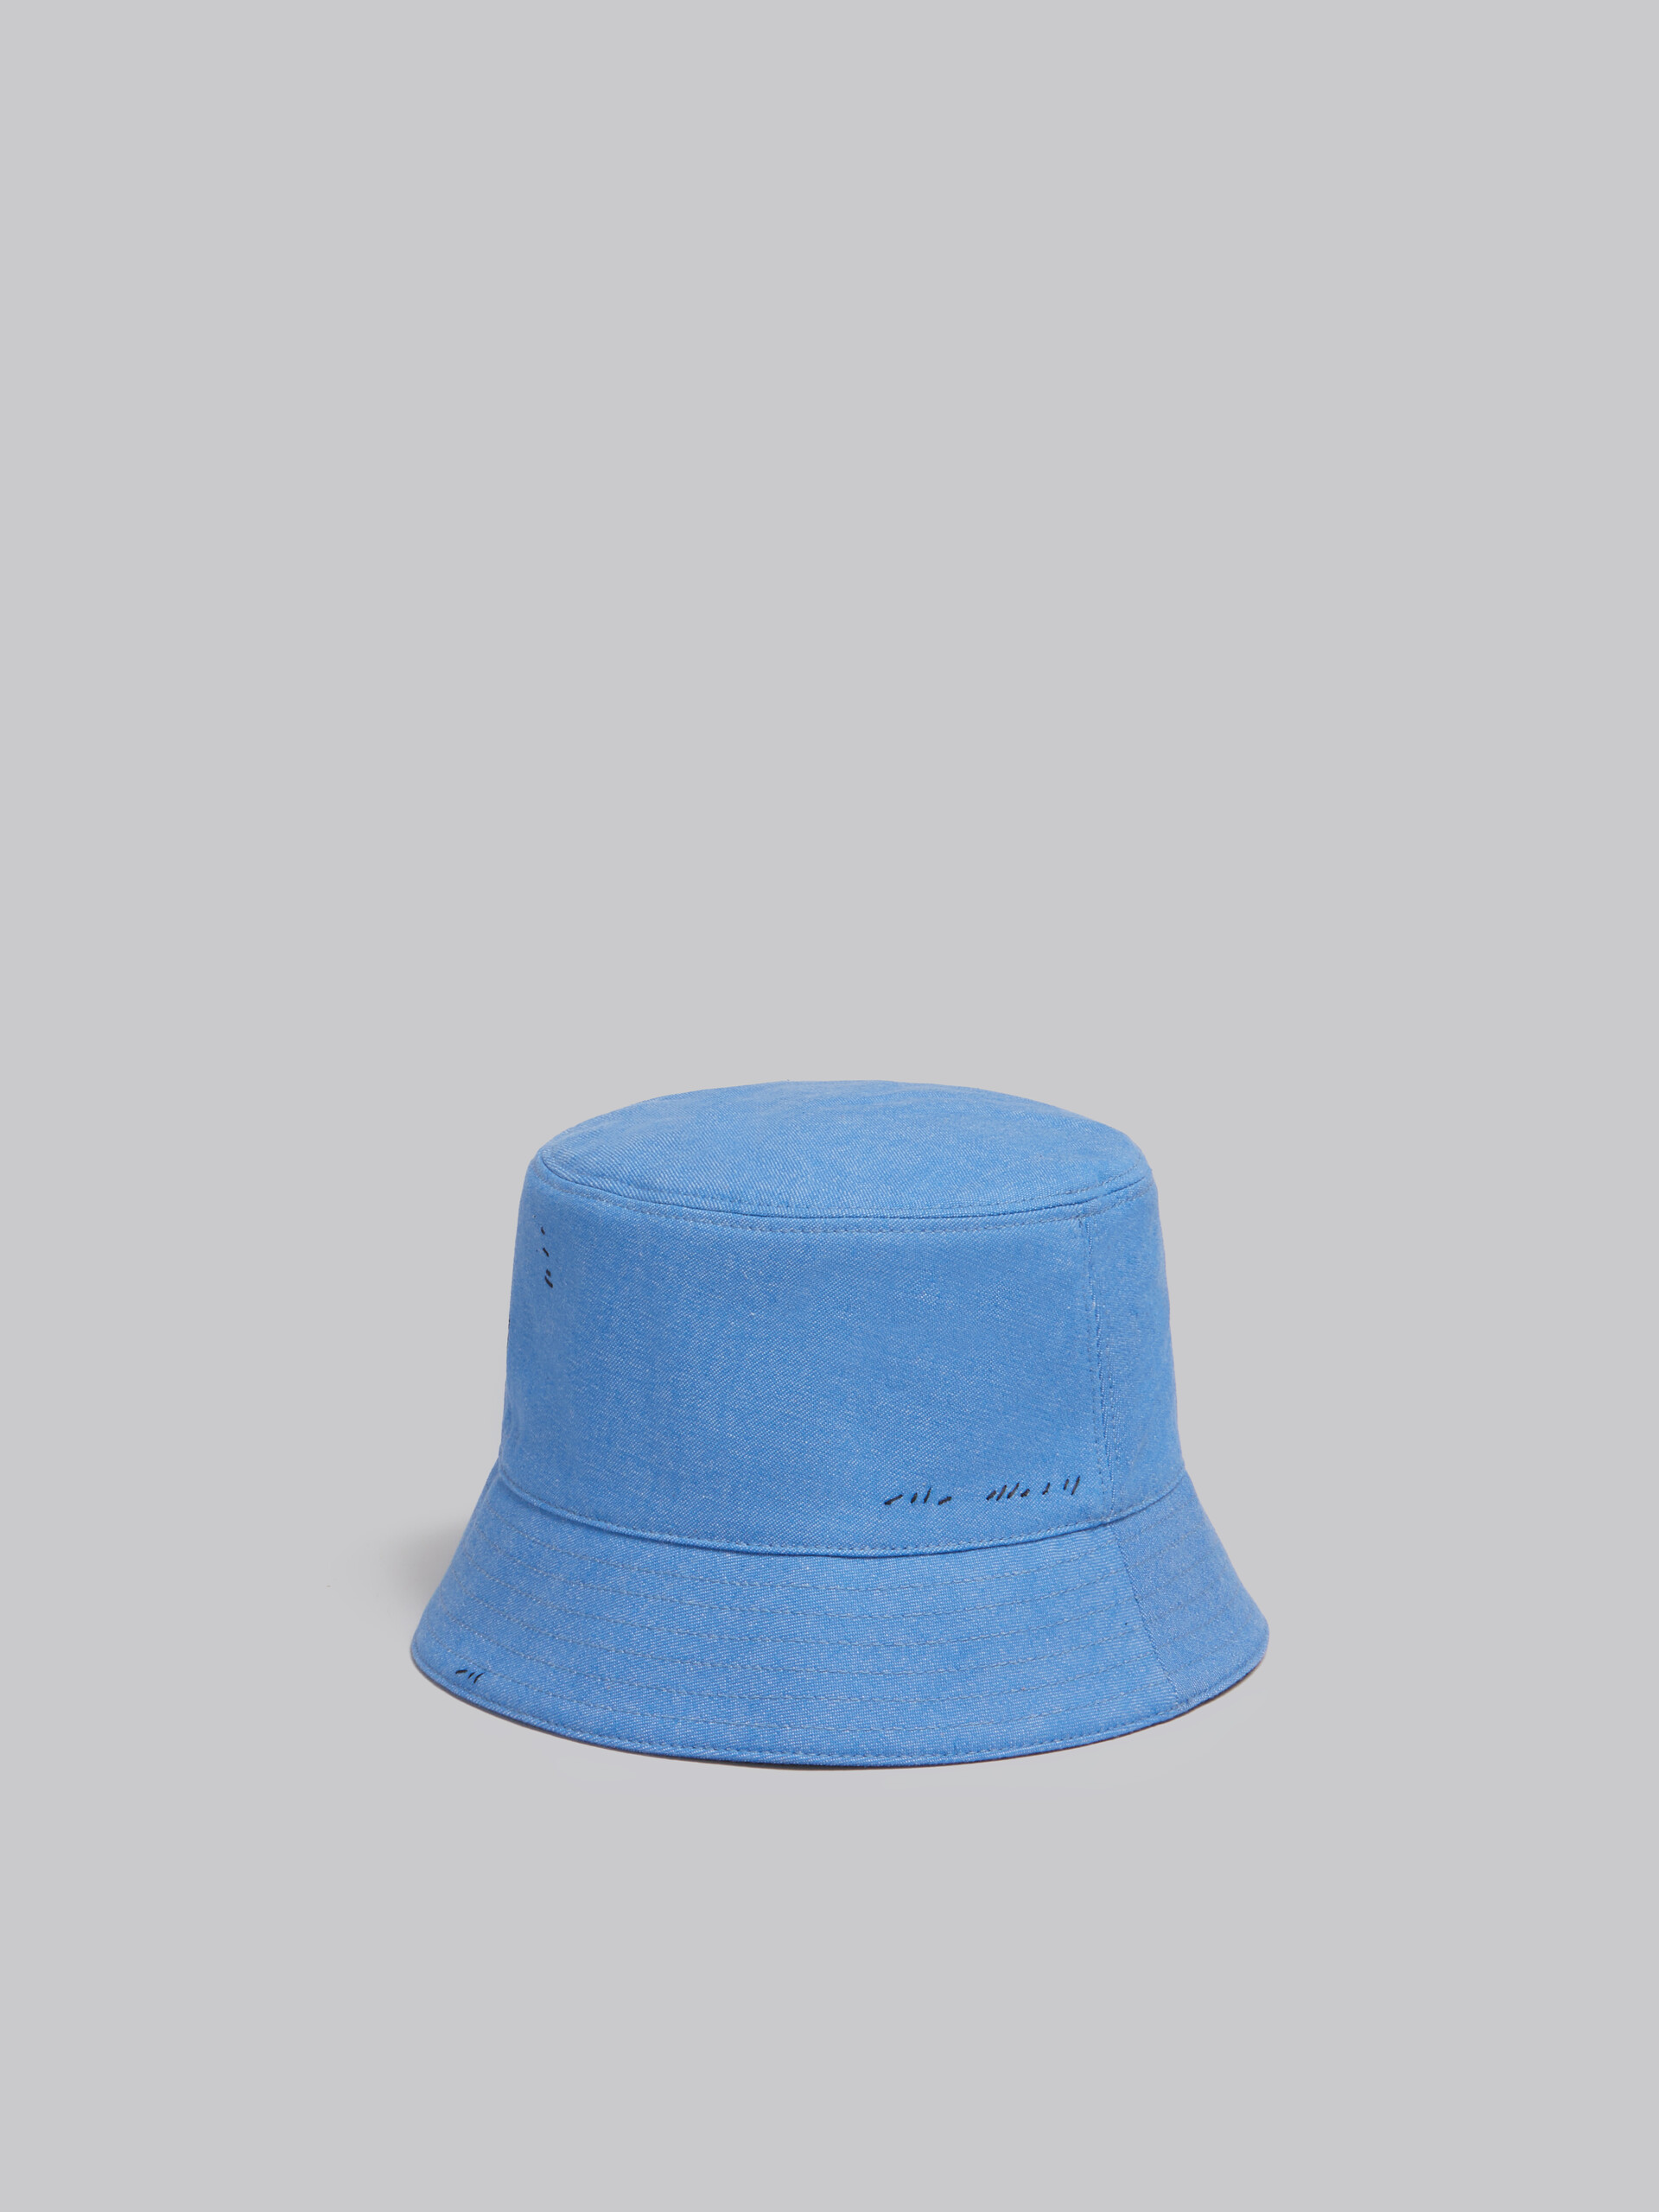 Cappello bucket in denim blu con logo ricamato - Cappelli - Image 3